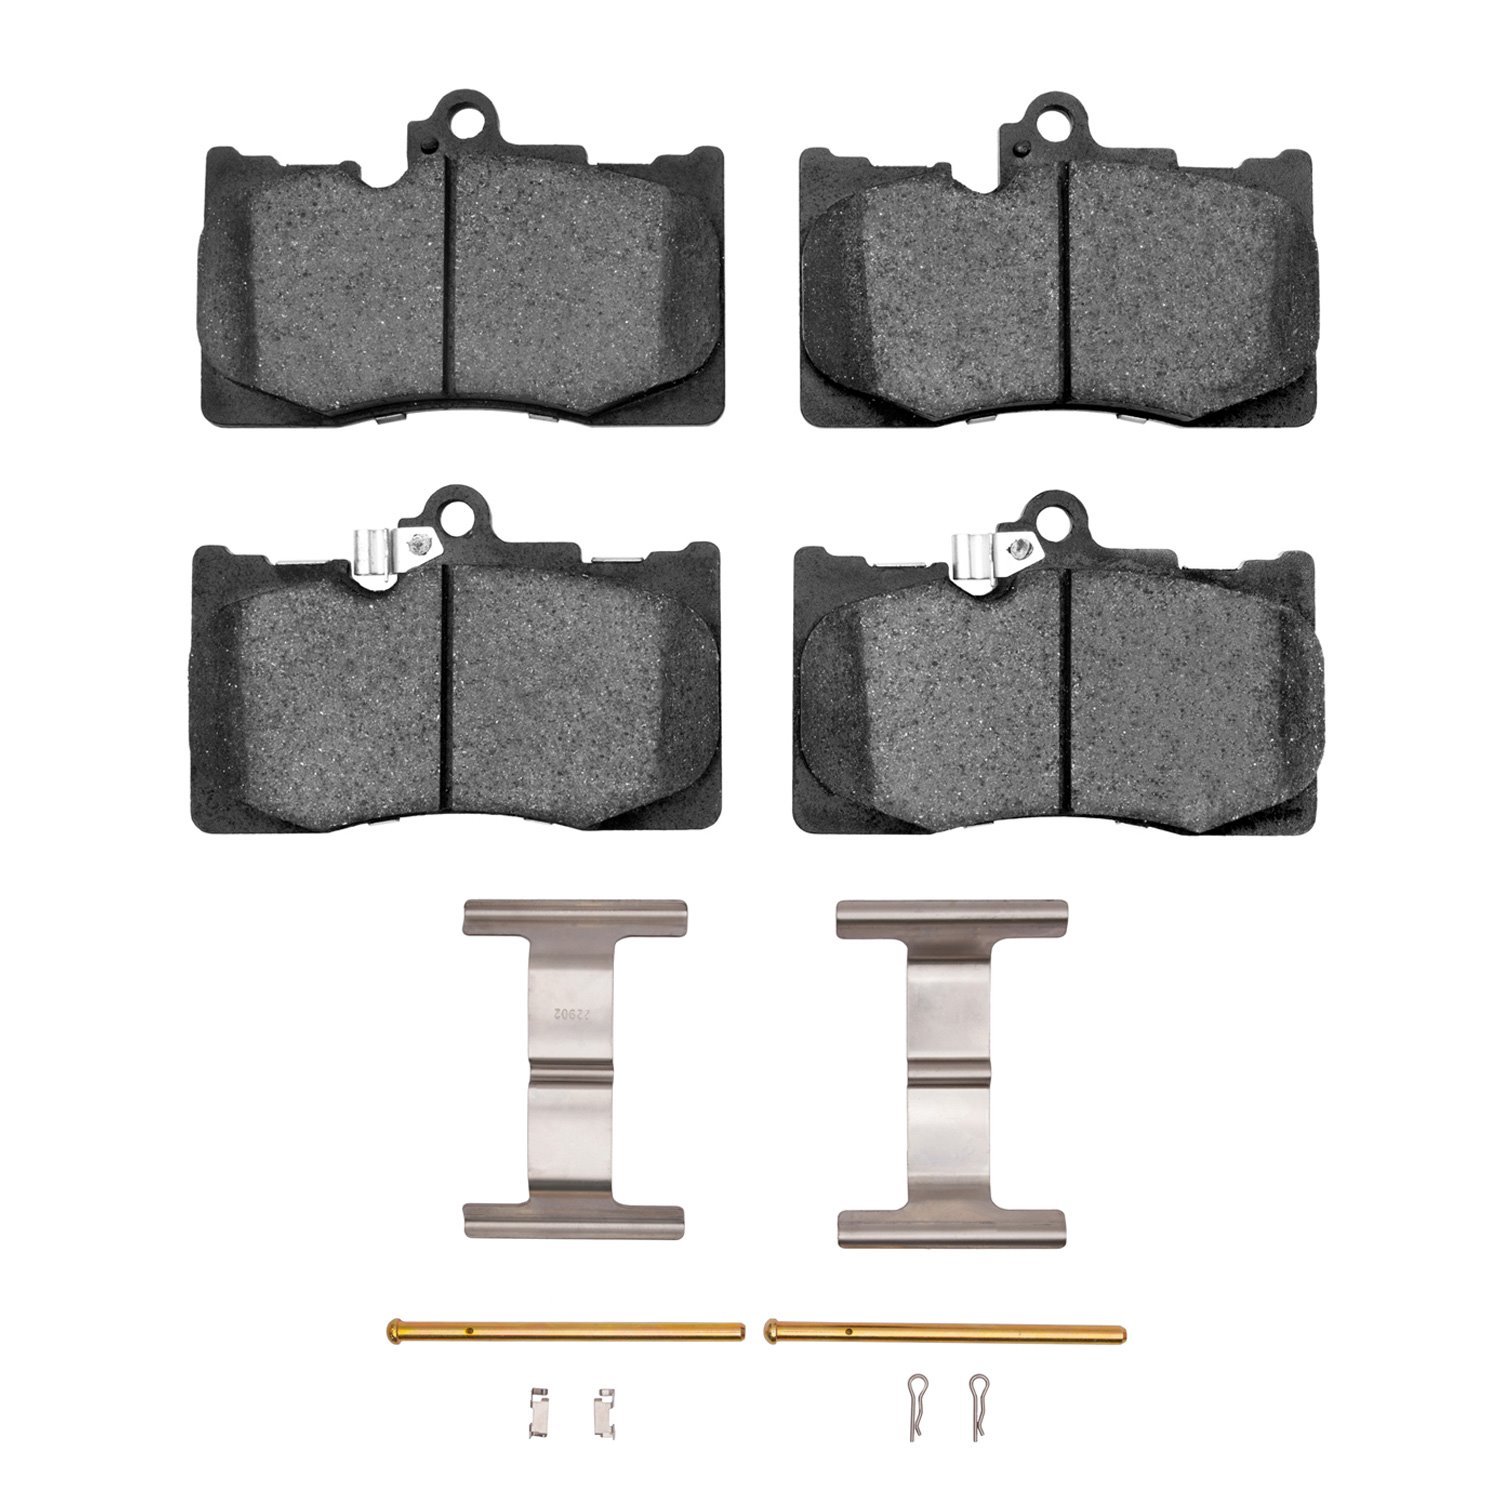 1310-1118-01 3000-Series Ceramic Brake Pads & Hardware Kit, Fits Select Lexus/Toyota/Scion, Position: Front